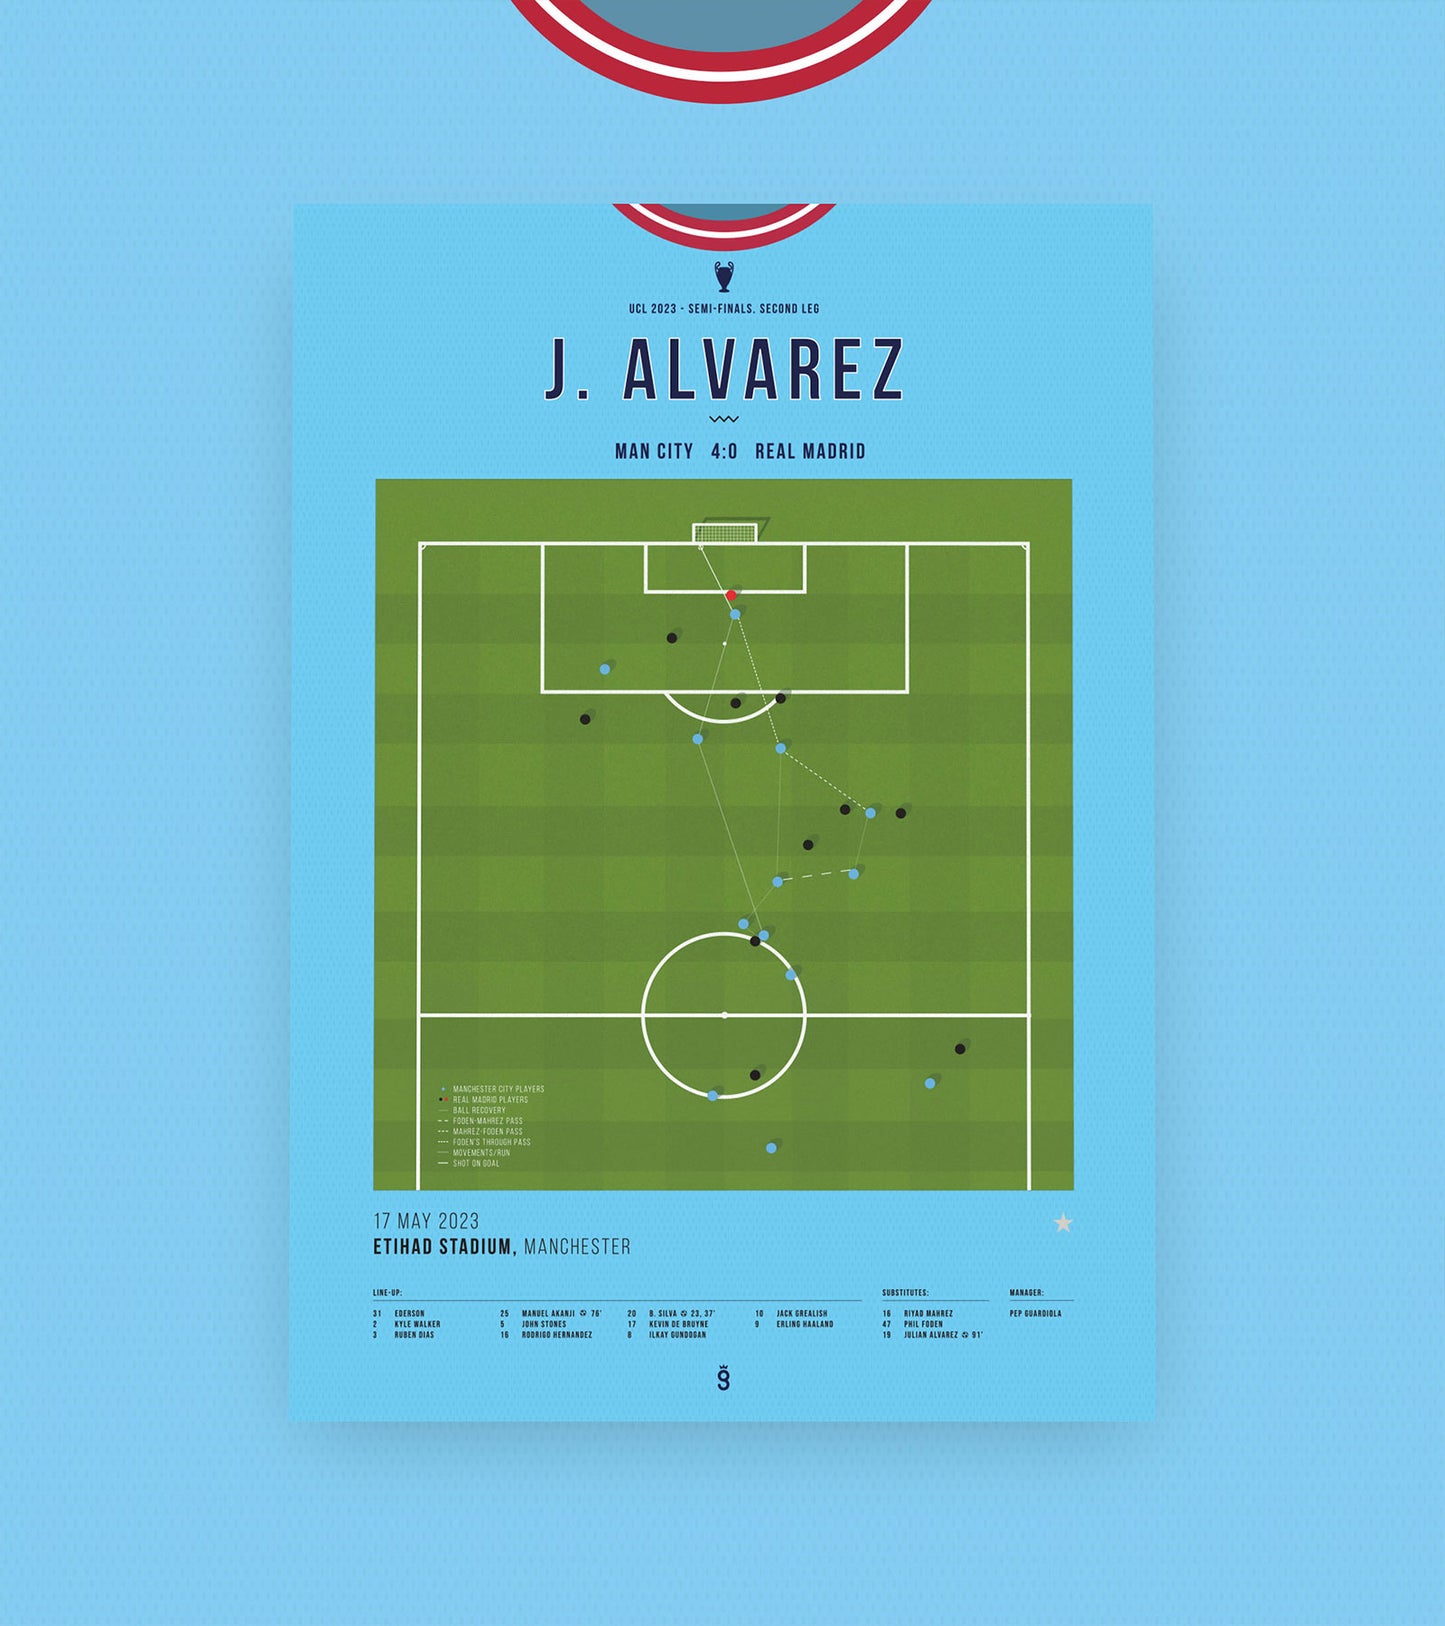 Julian Alvarez scores the 4-0 in runaway victory vs Real